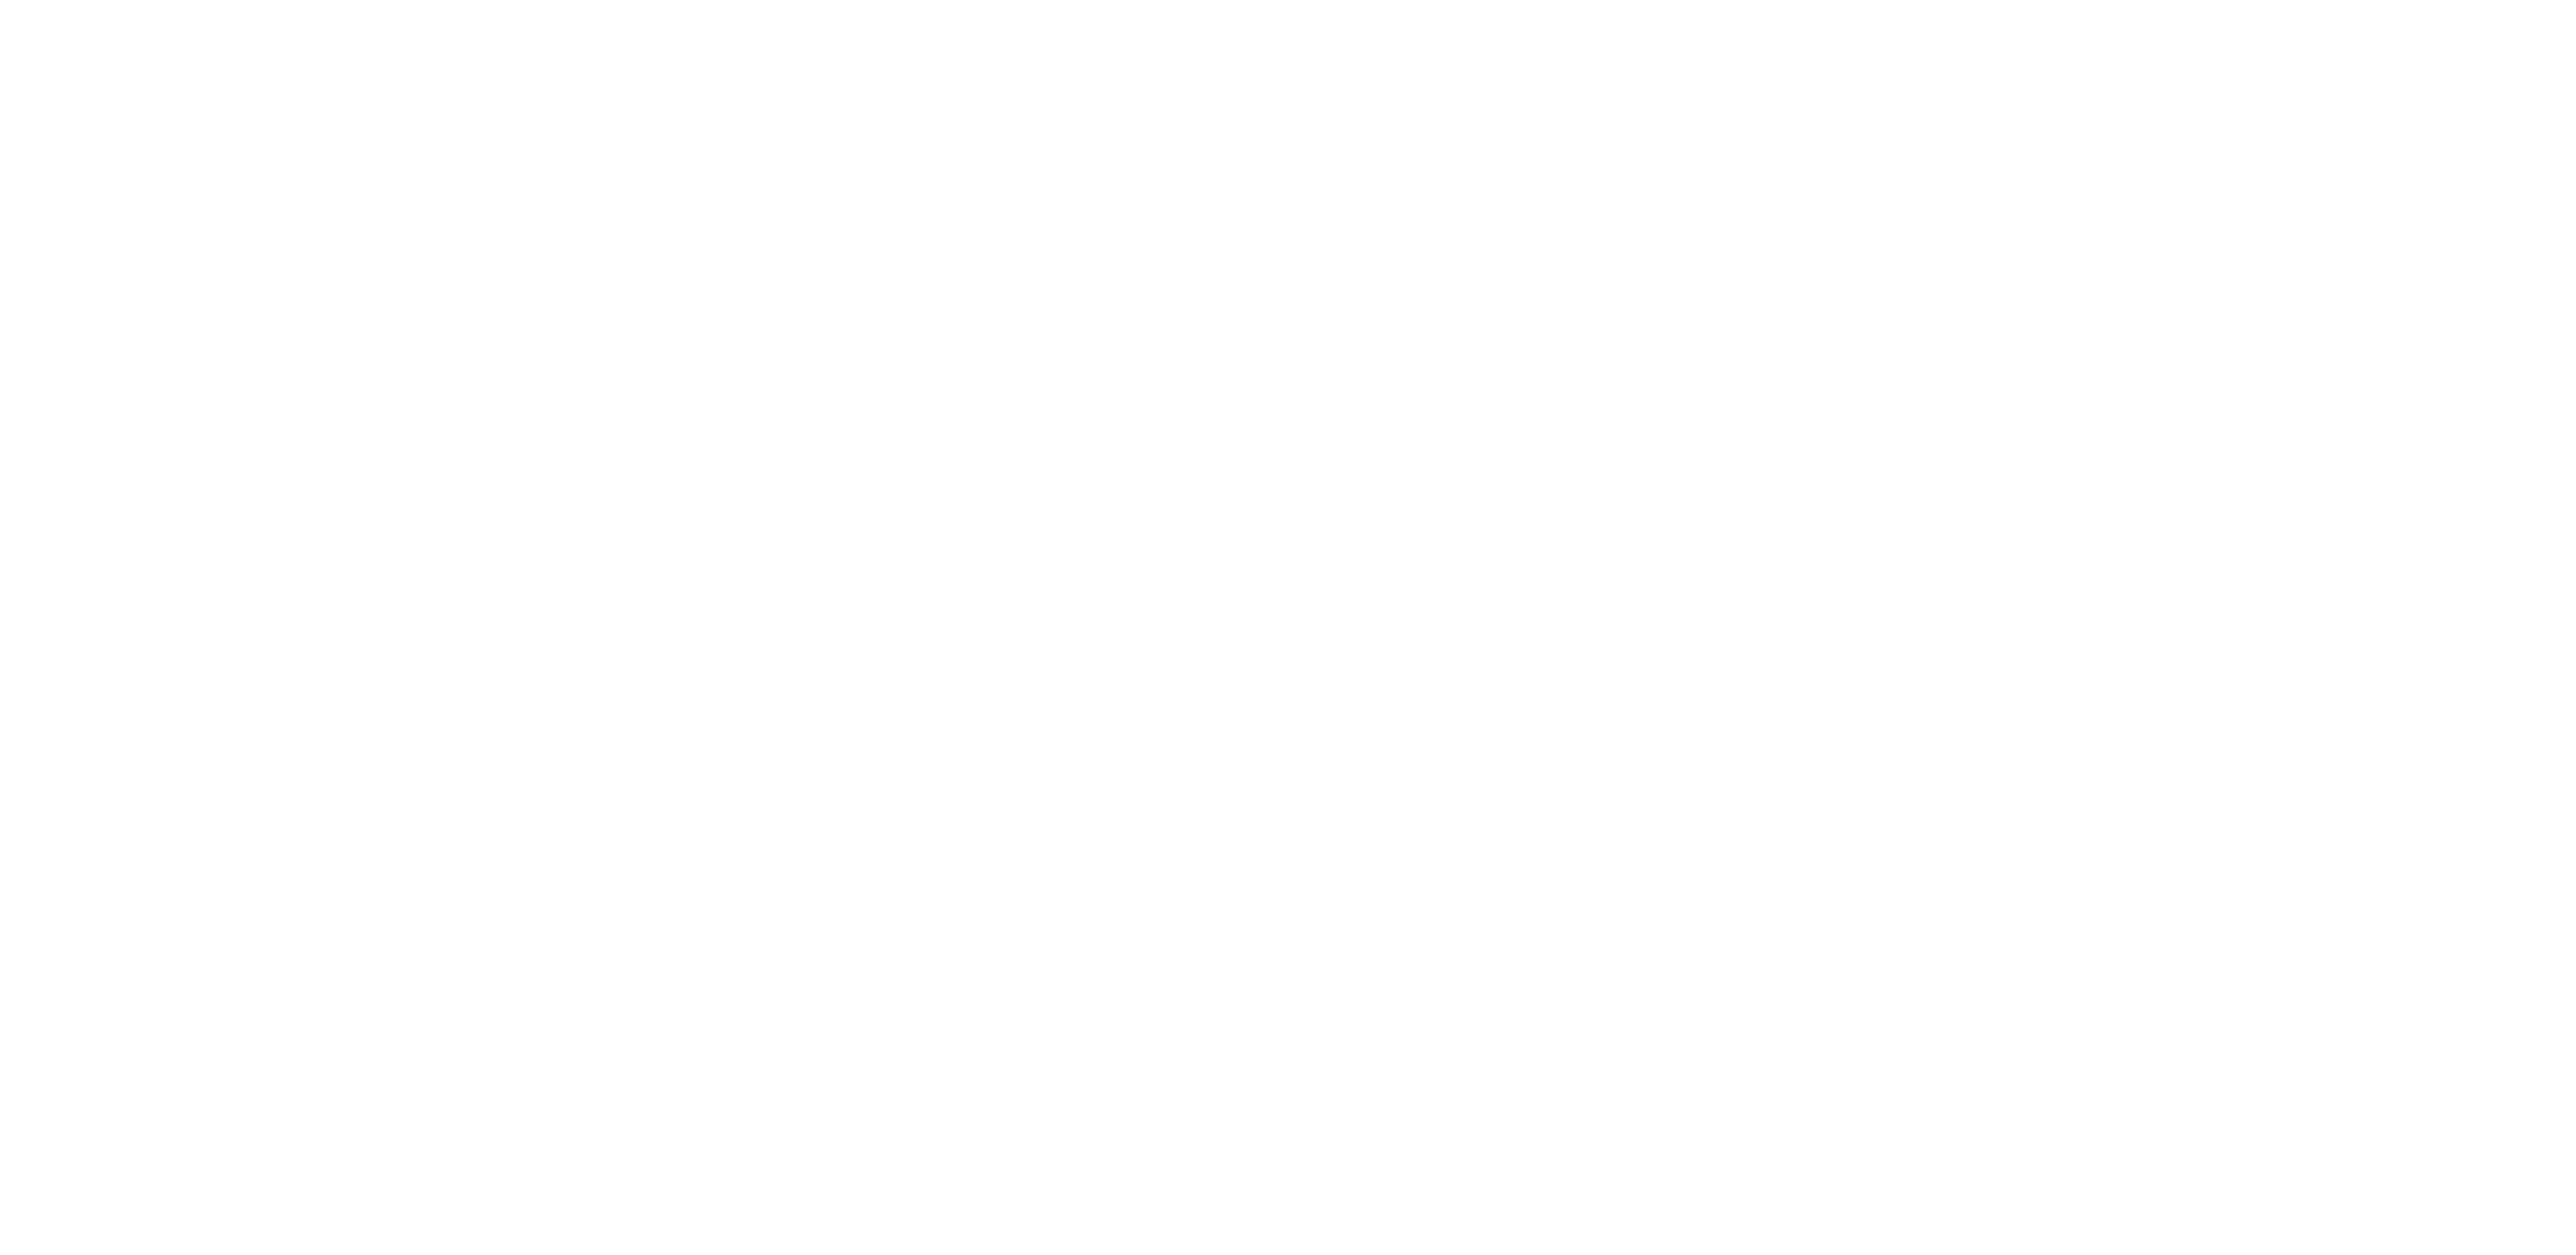 90TH ANNIVERSARY NISSAN